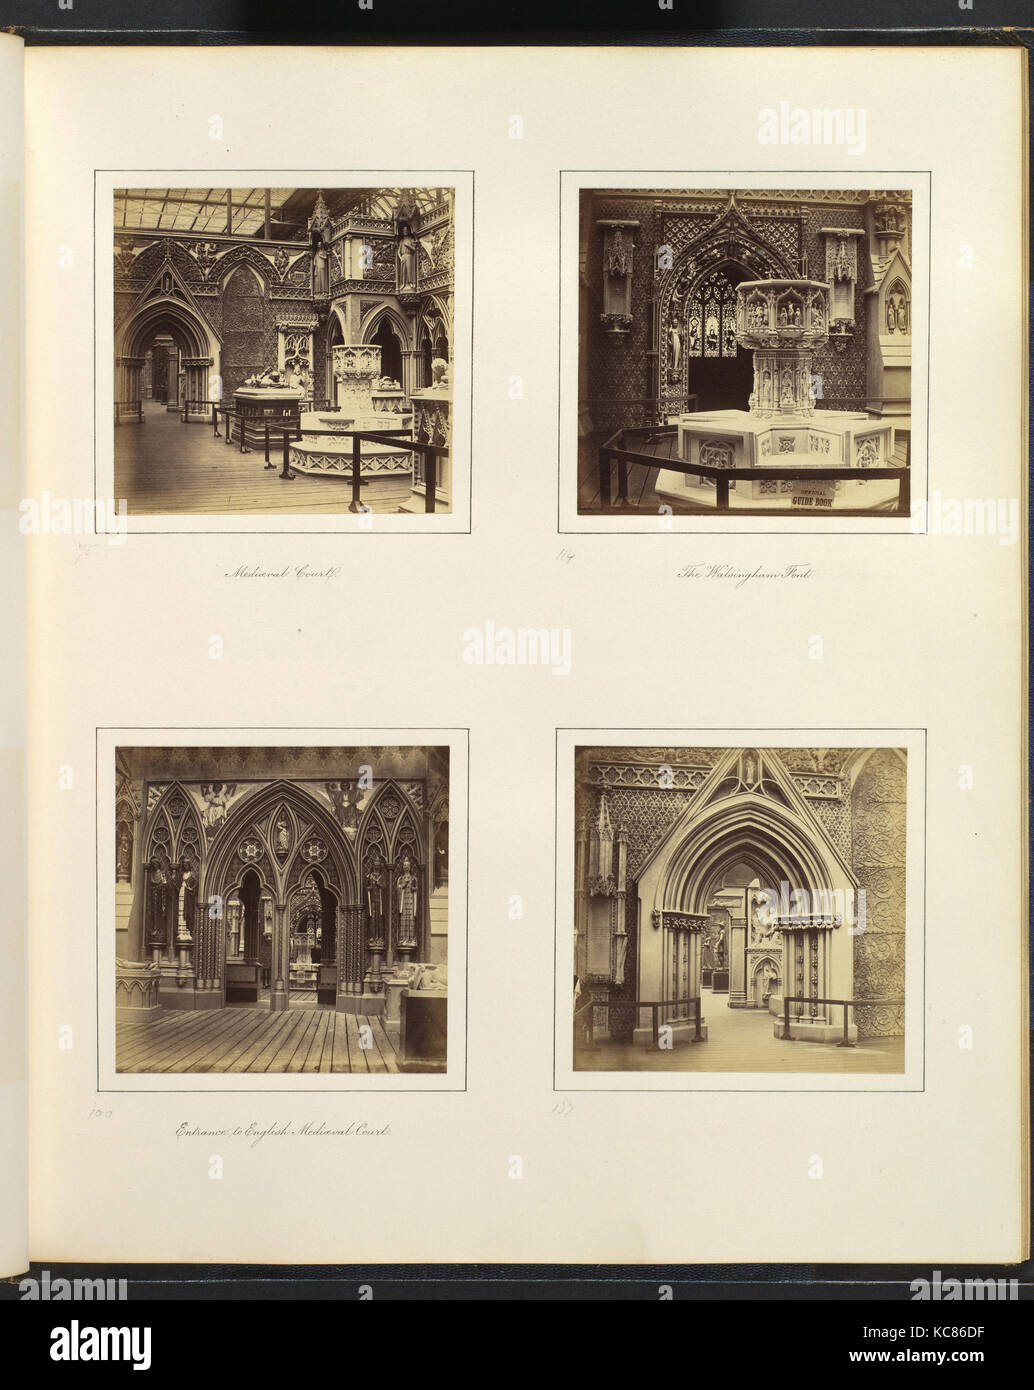 Corte medievale; la Walsingham Font; Ingresso inglese corte medievale, attribuita a Philip Henry Delamotte, ca. 1859 Foto Stock